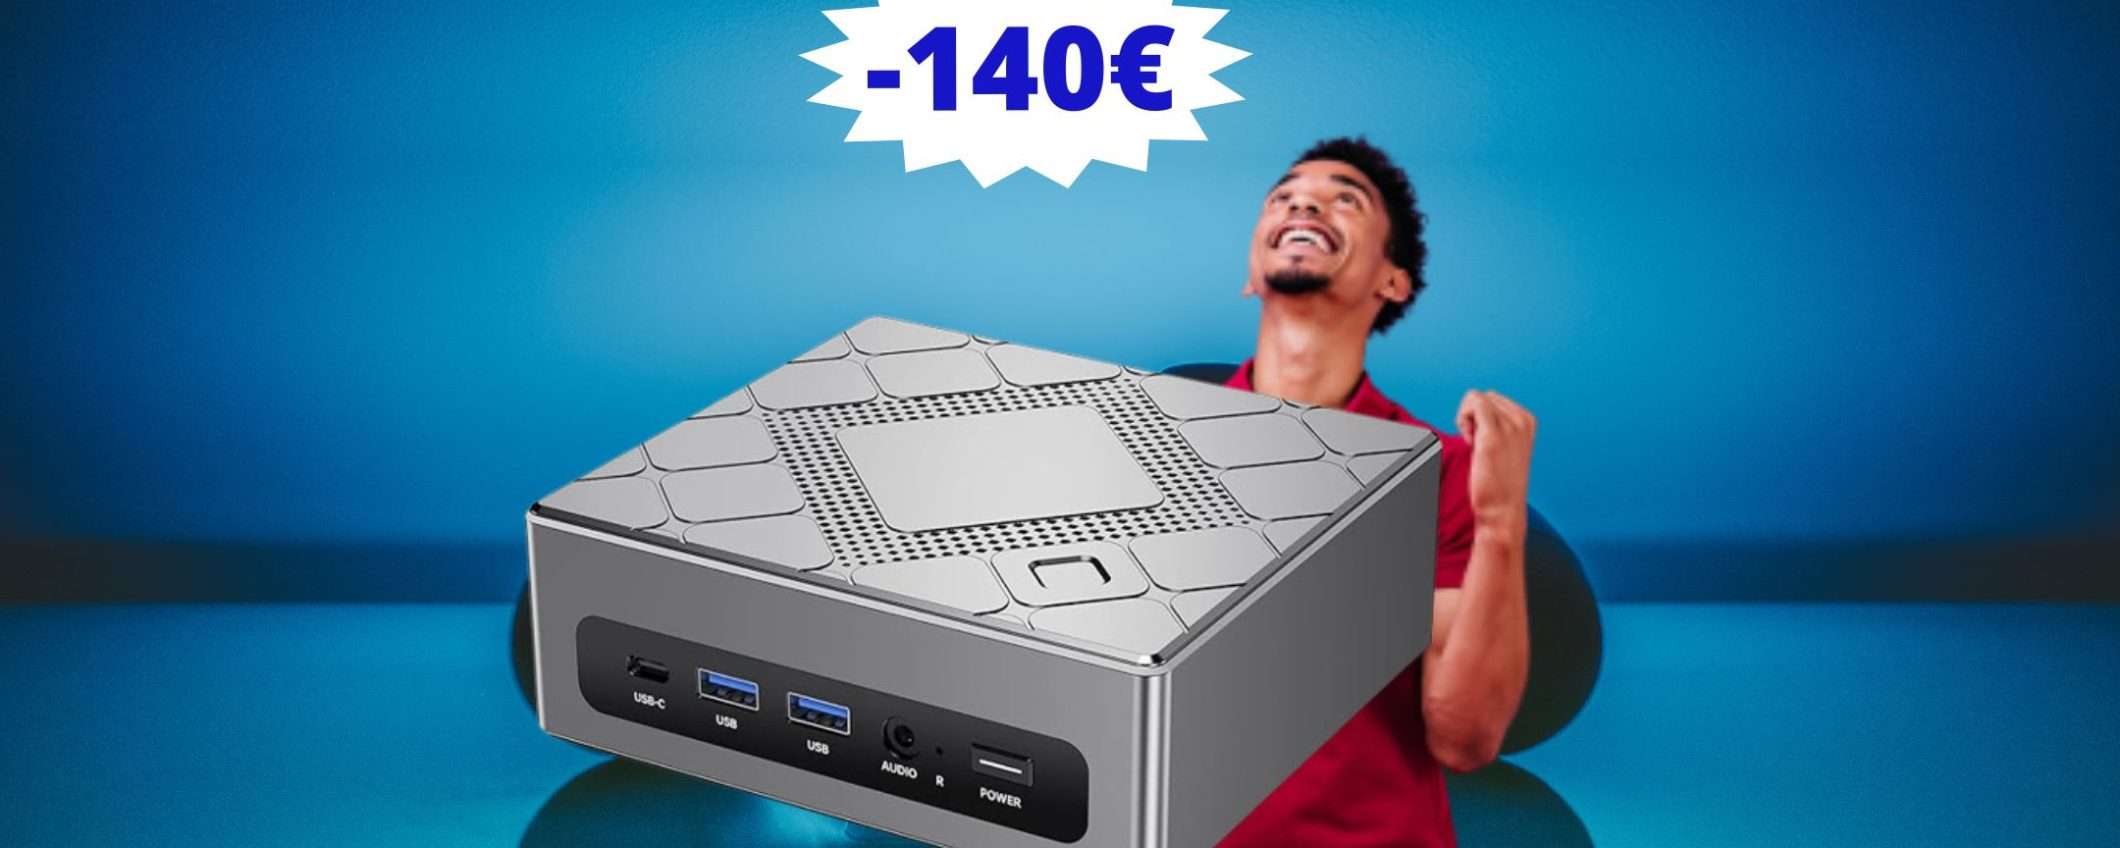 Mini PC con Intel i5-8259U: MEGA coupon sconto di 140 euro